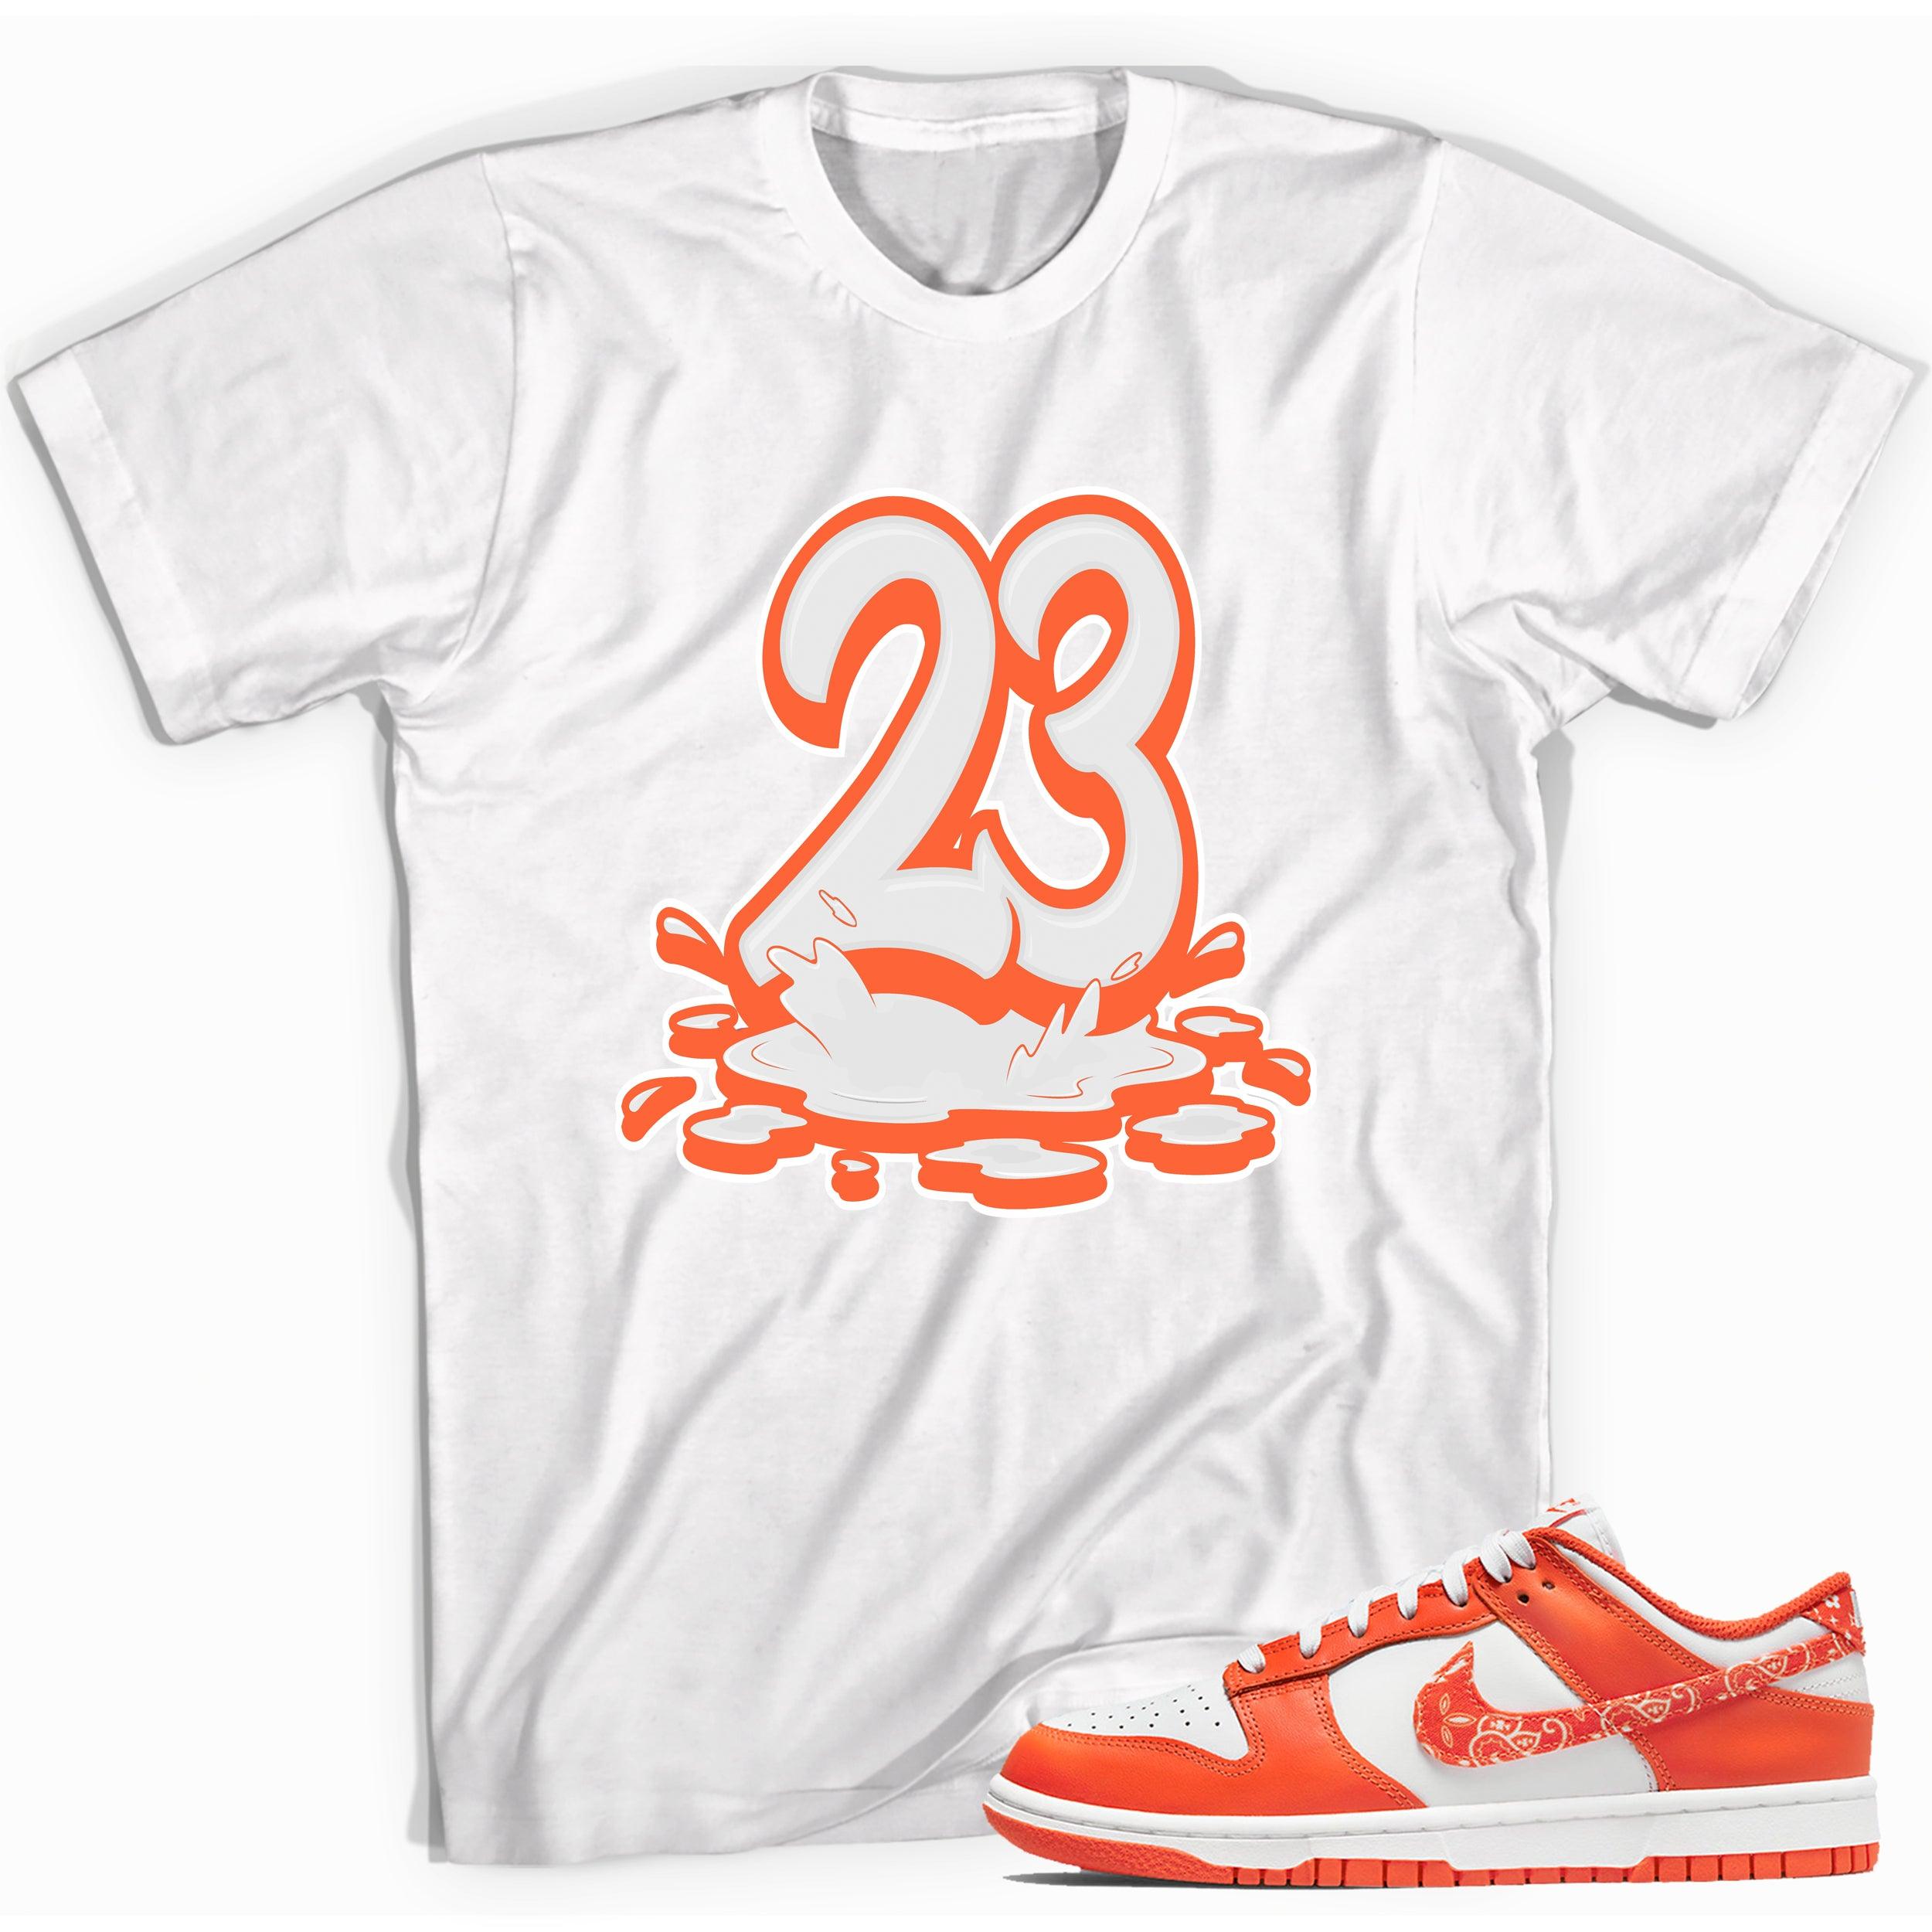 Number 23 Melting Shirt Nike Dunk Low Essential Paisley Pack Orange photo